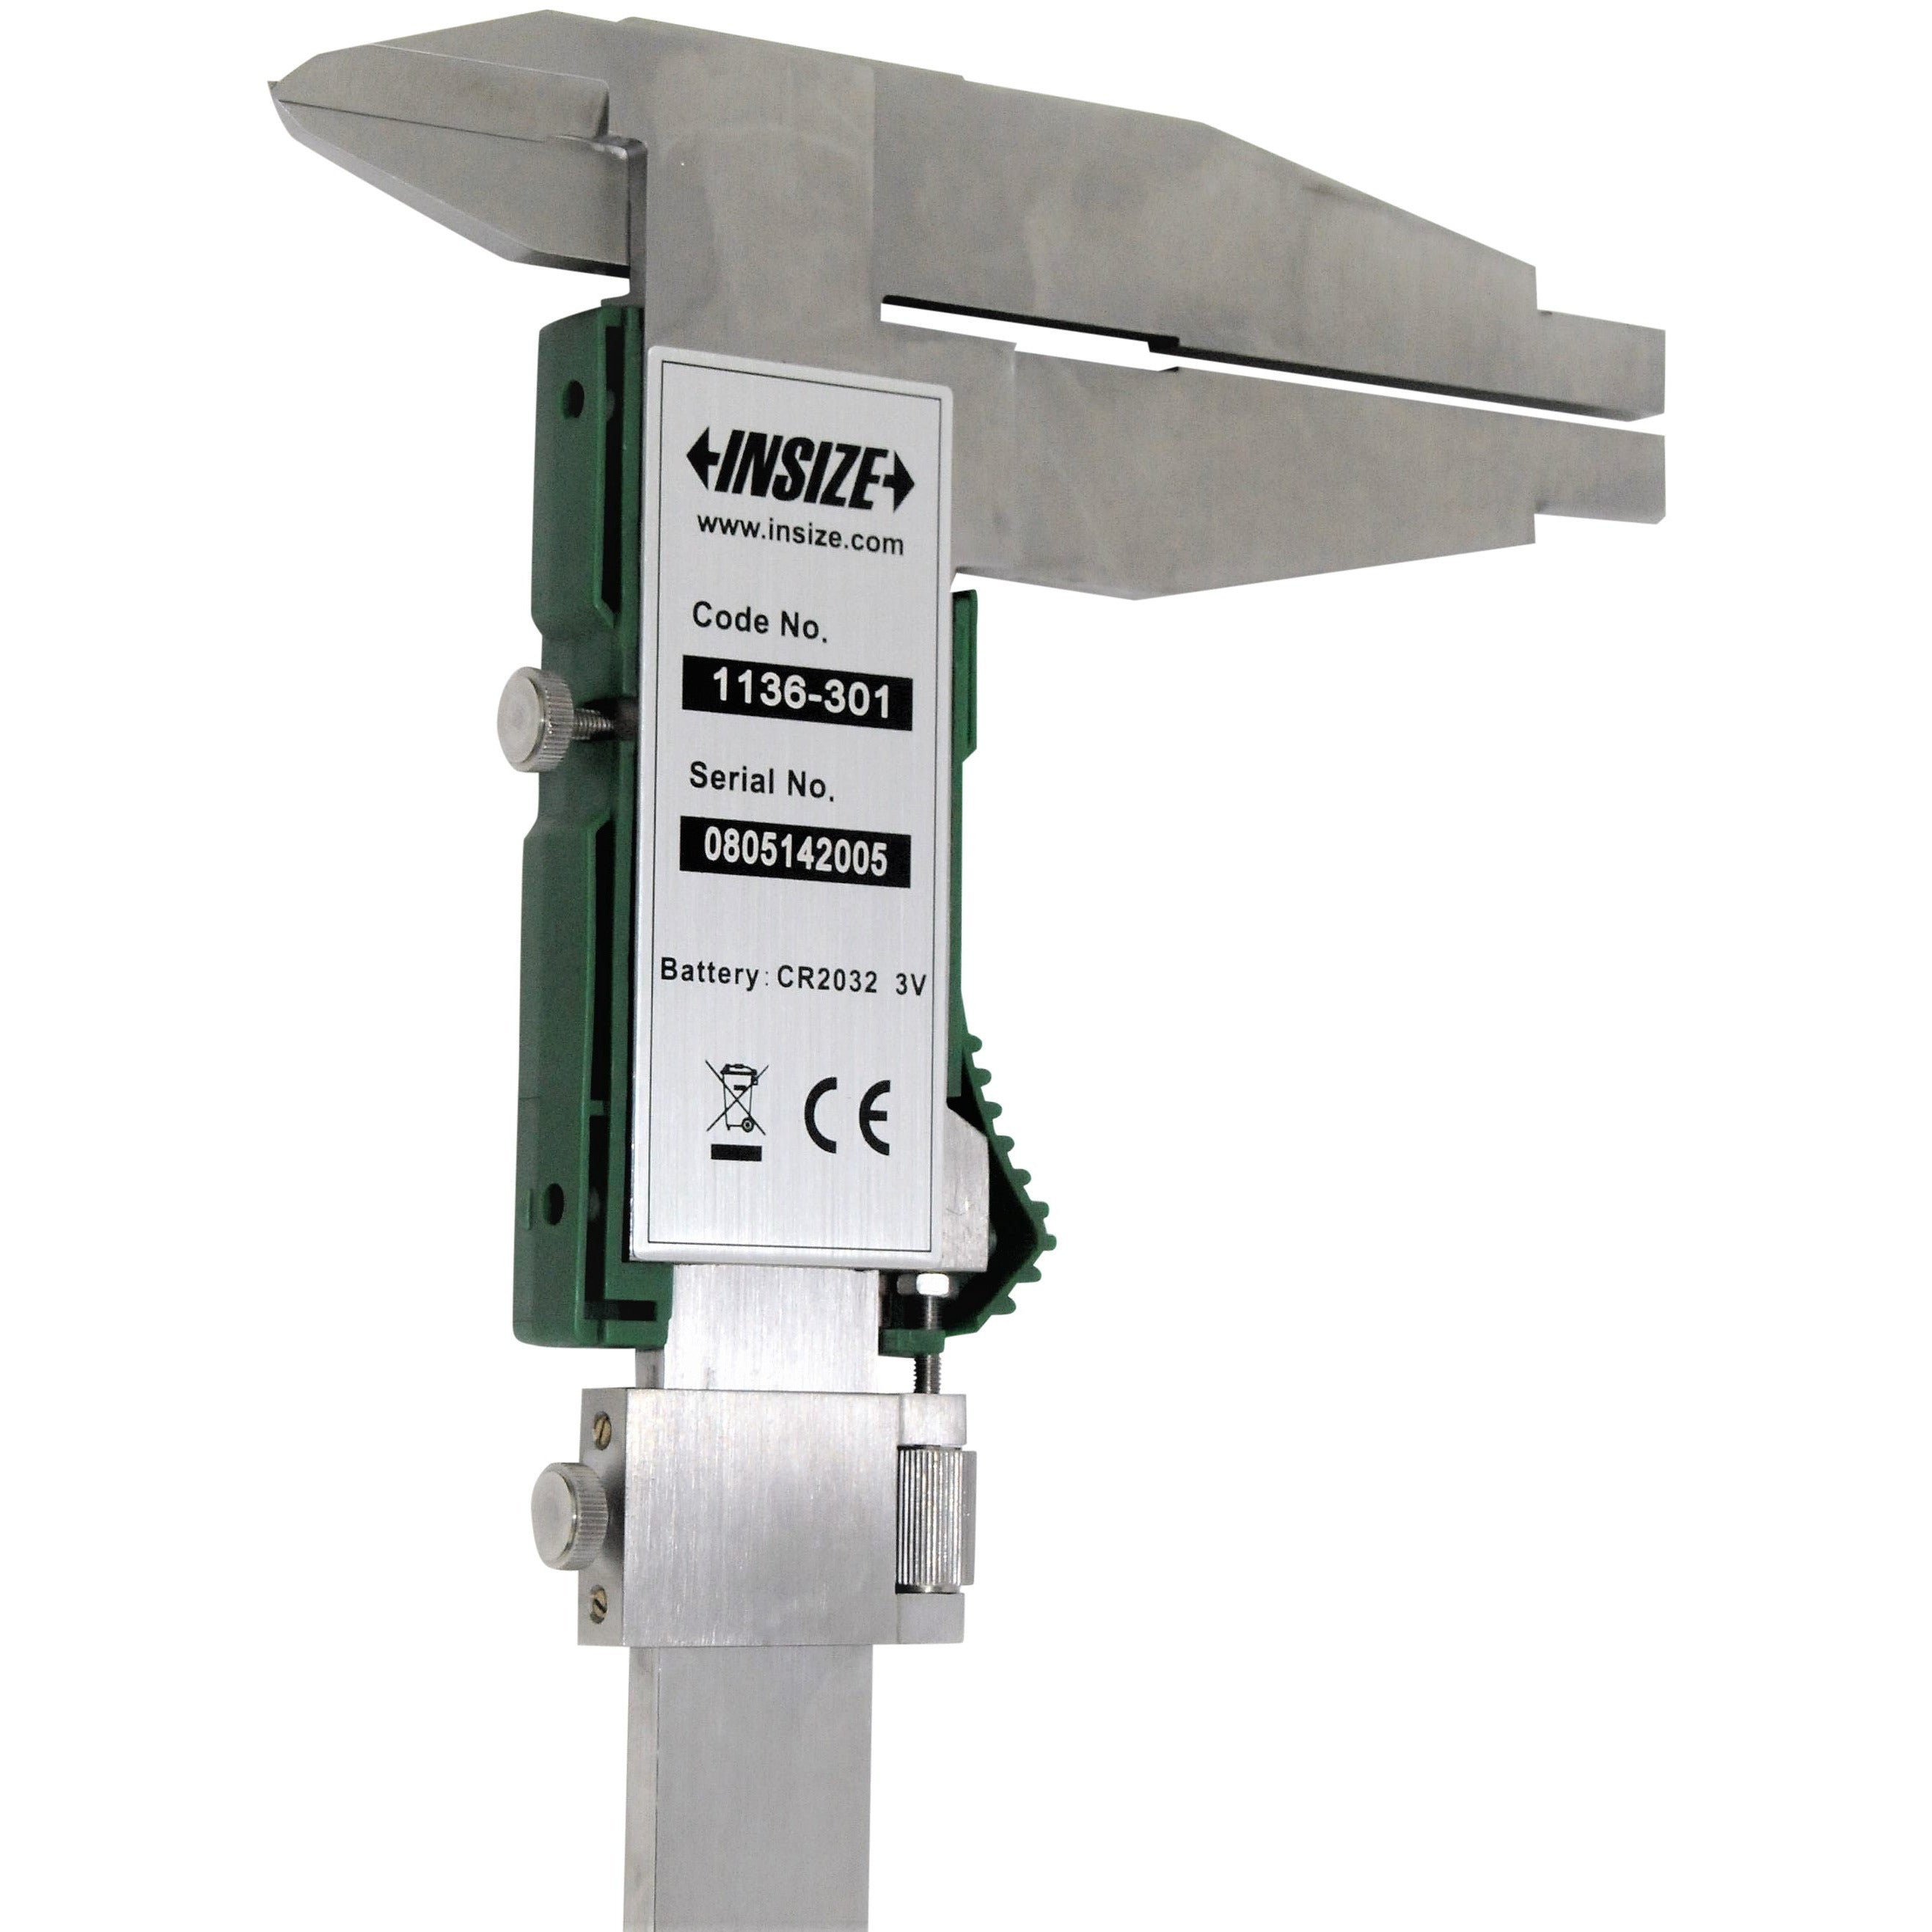 Insize Digital Caliper 0-300mm / 0-12" Range Series 1136-301